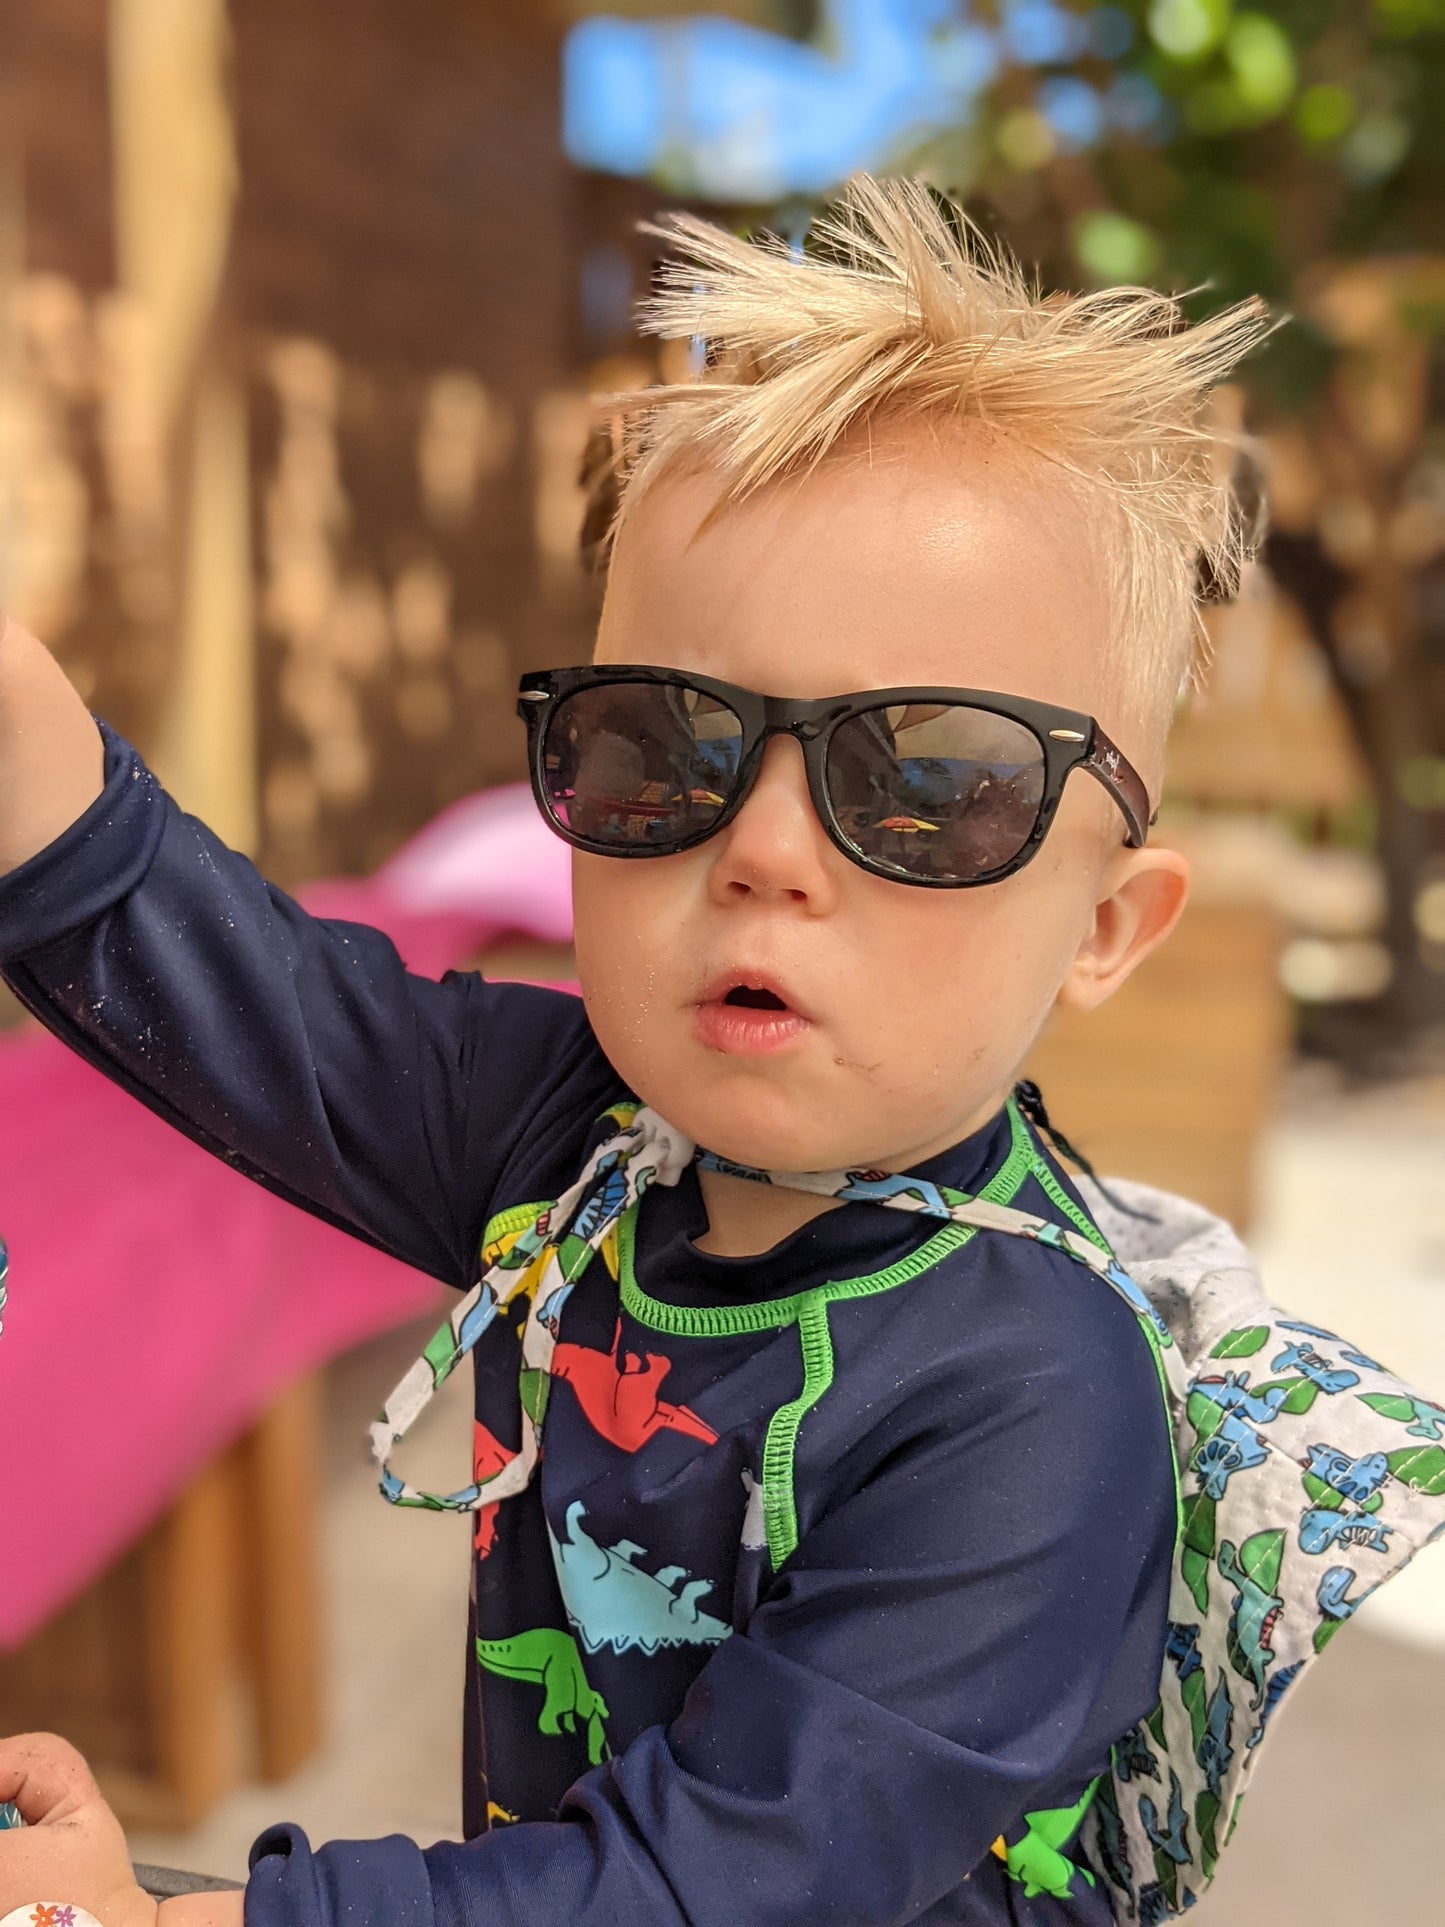 Baby & Toddler Flex-Frame Sunglasses Polarized UV400 With Strap - Pink